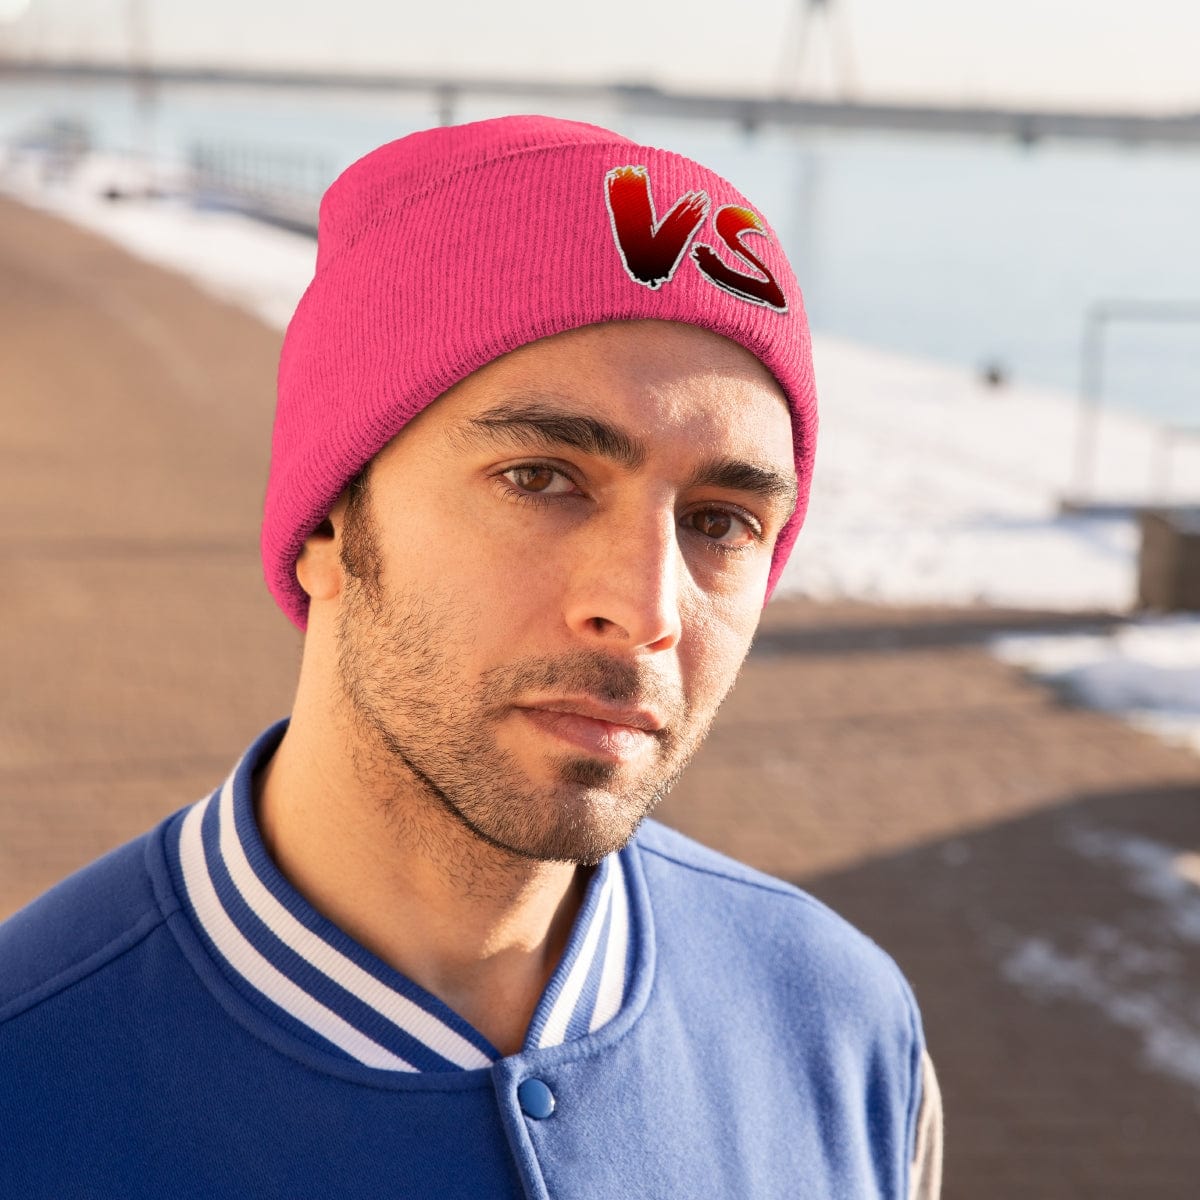 Venus Versus Neon Pink | Knitted Beanie Hat